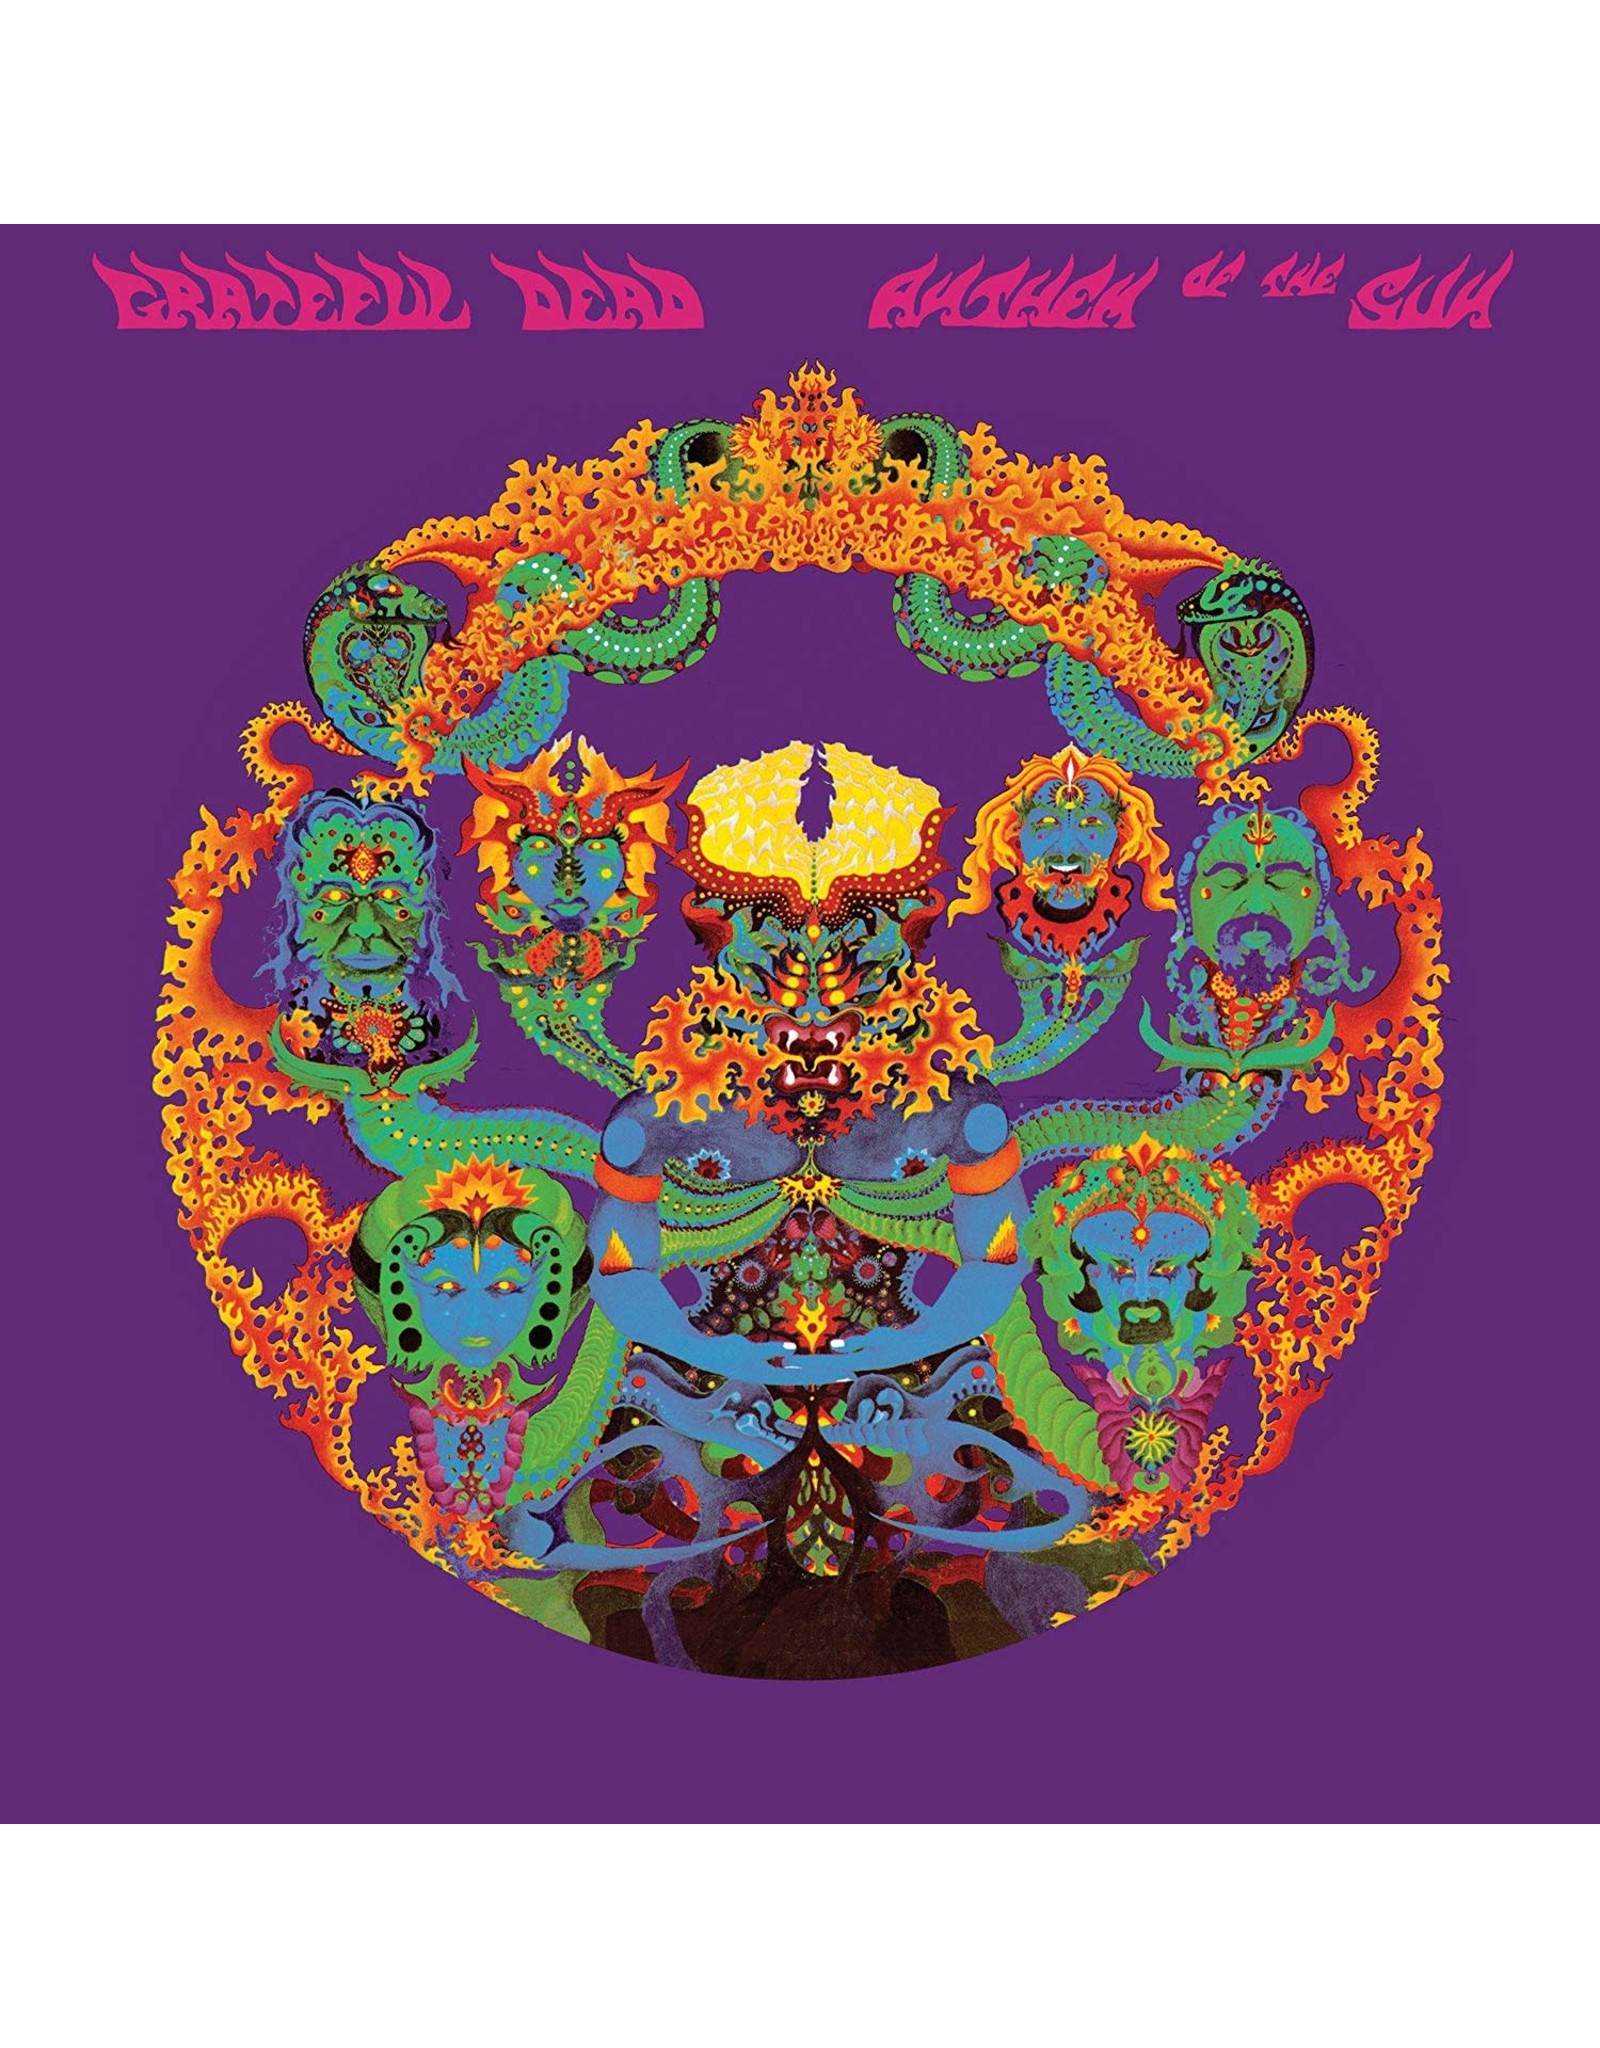 Grateful Dead - Anthem of the Sun (50th Anniversary)